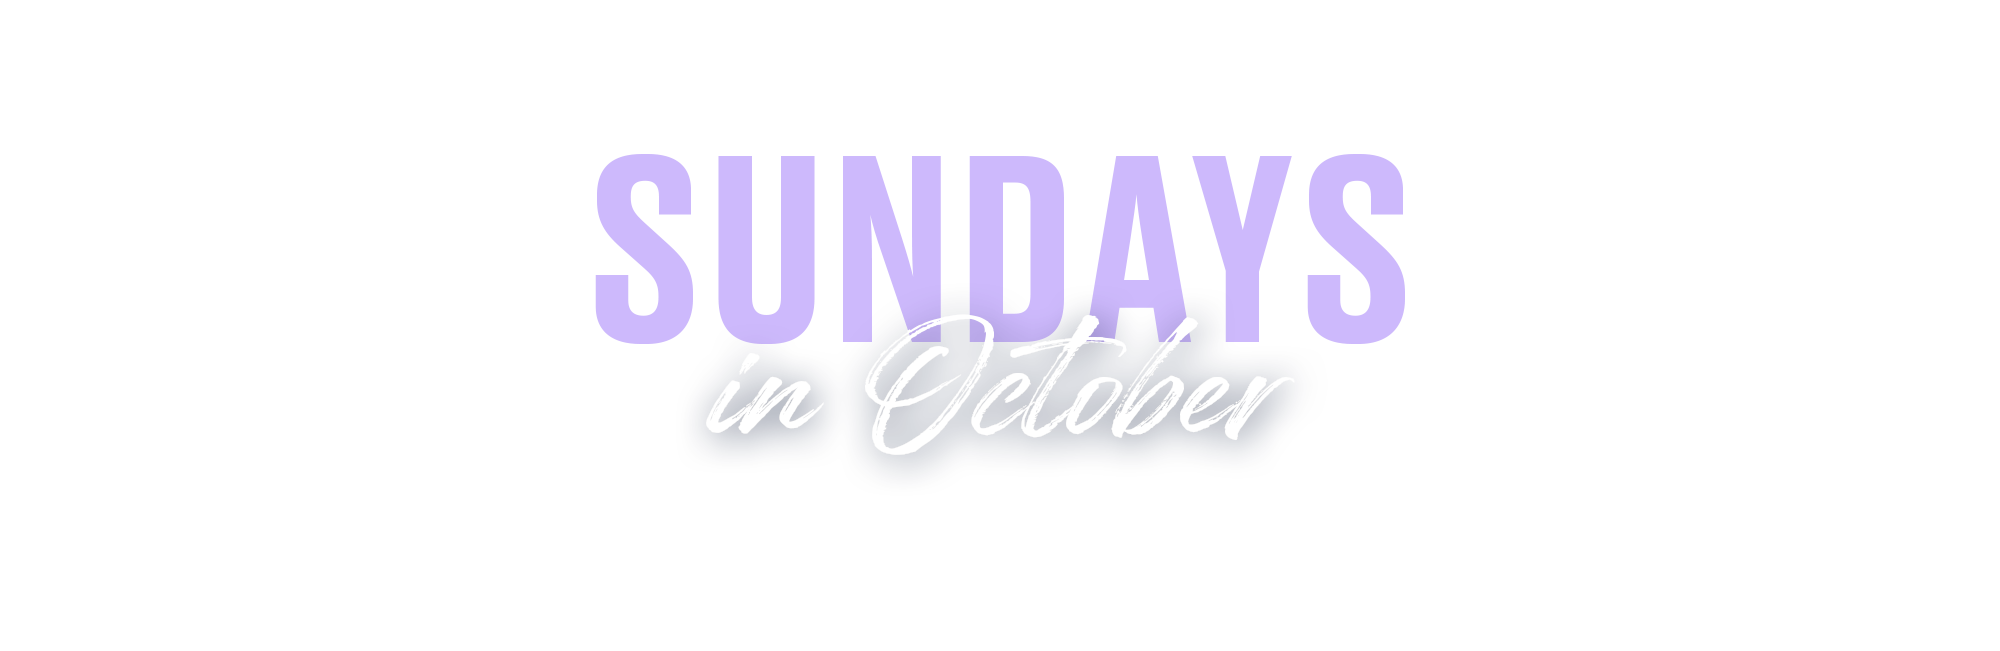 Sundays in October